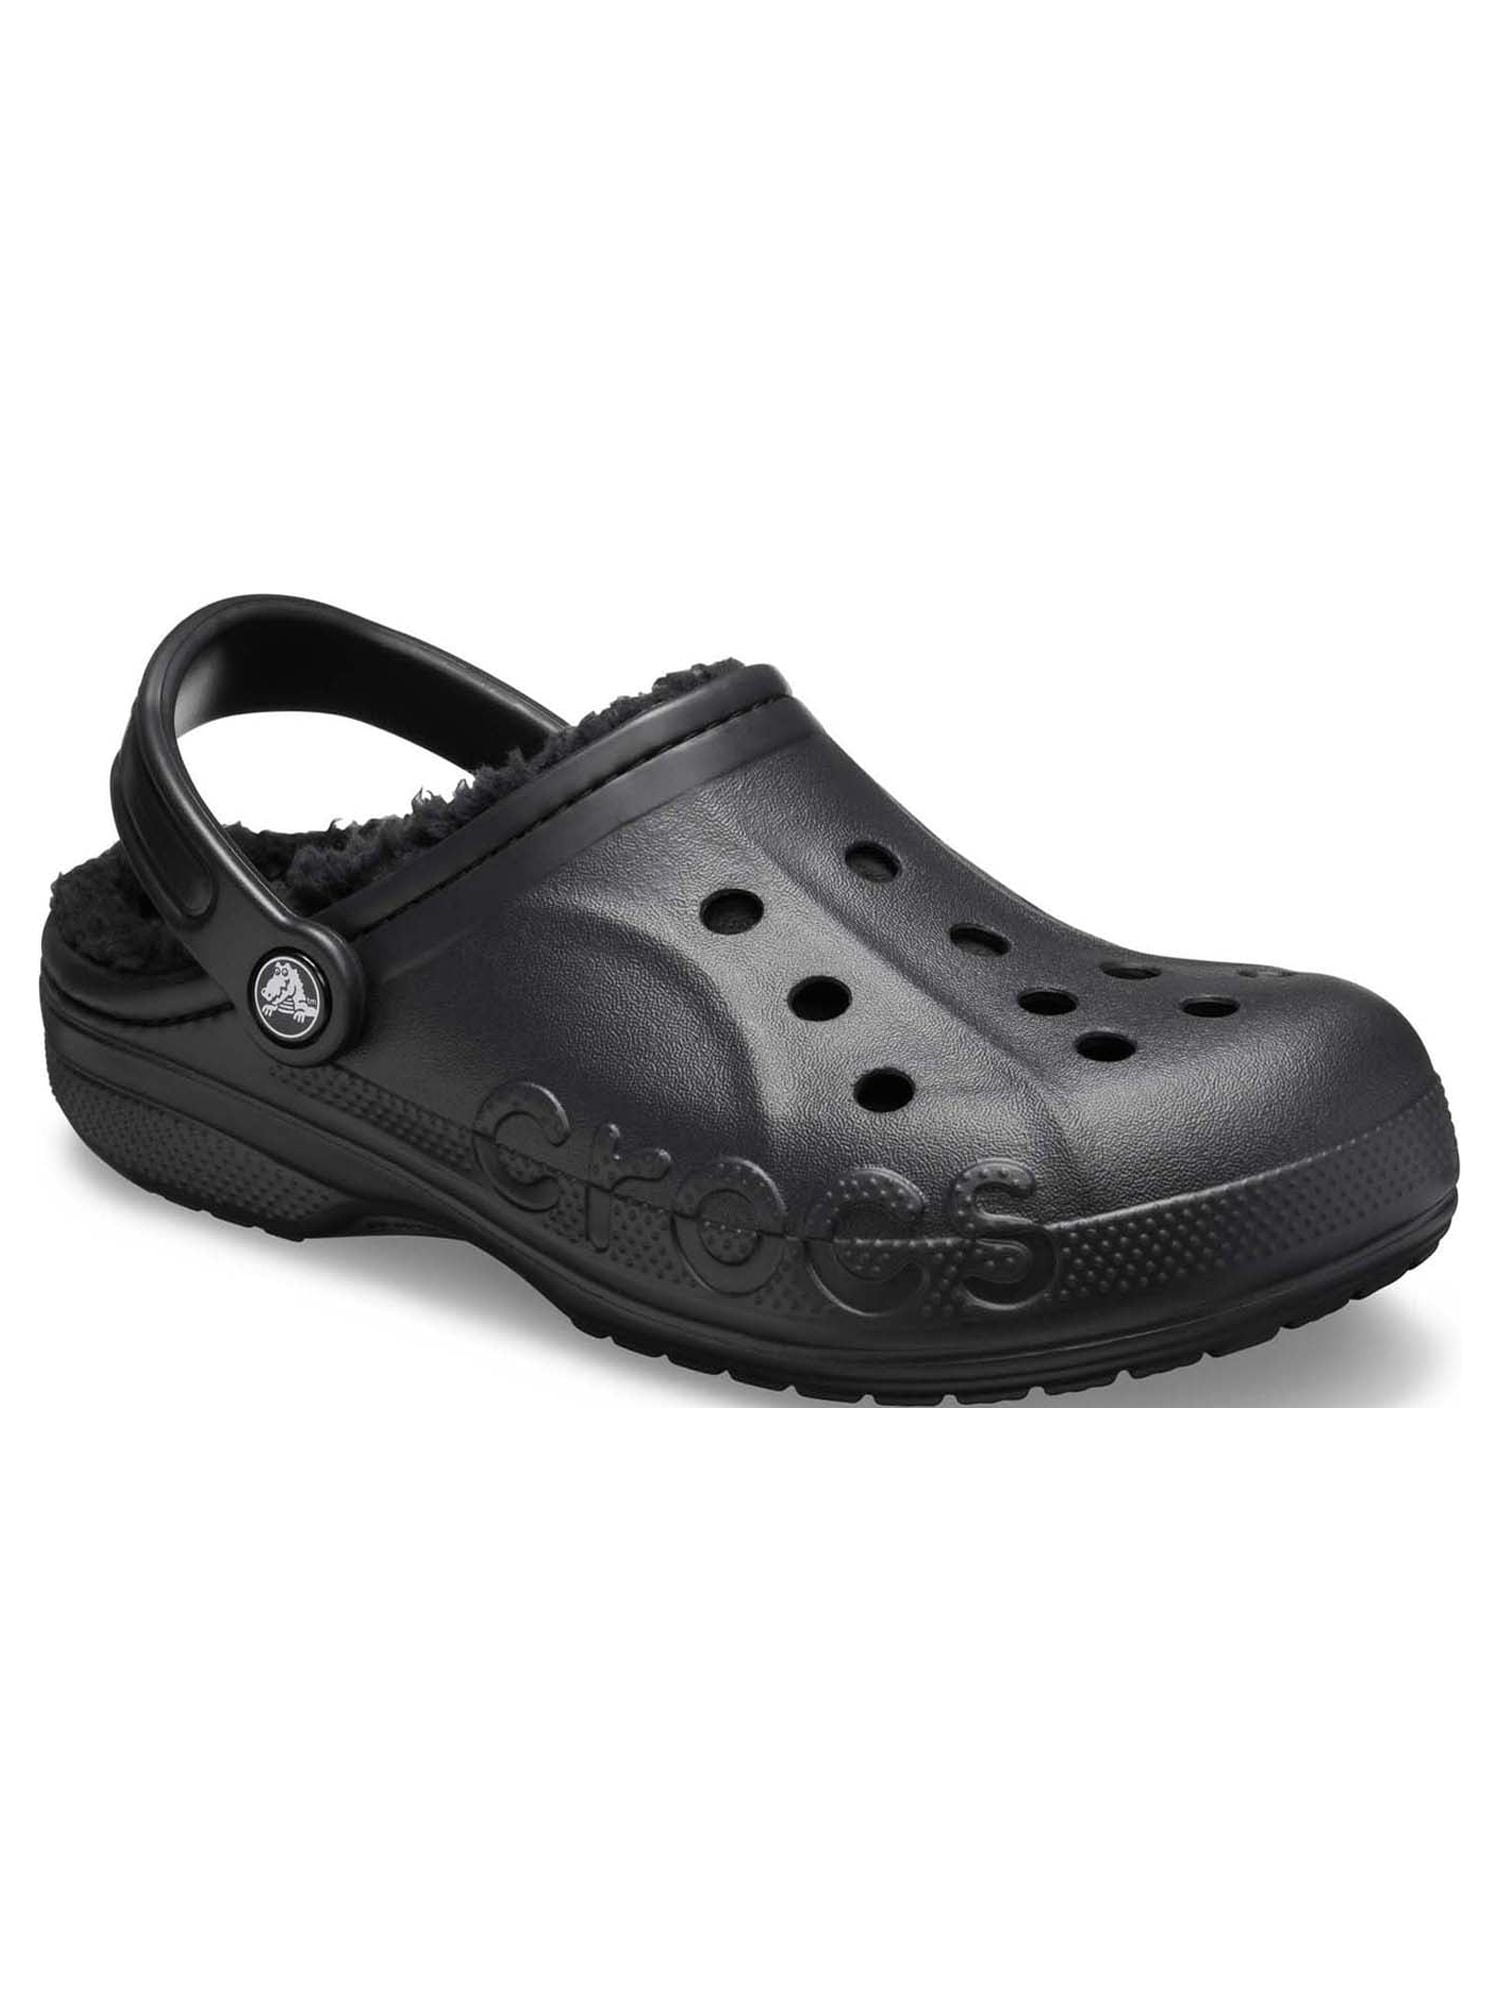 Crocs Unisex Baya Lined Clogs - Walmart.com